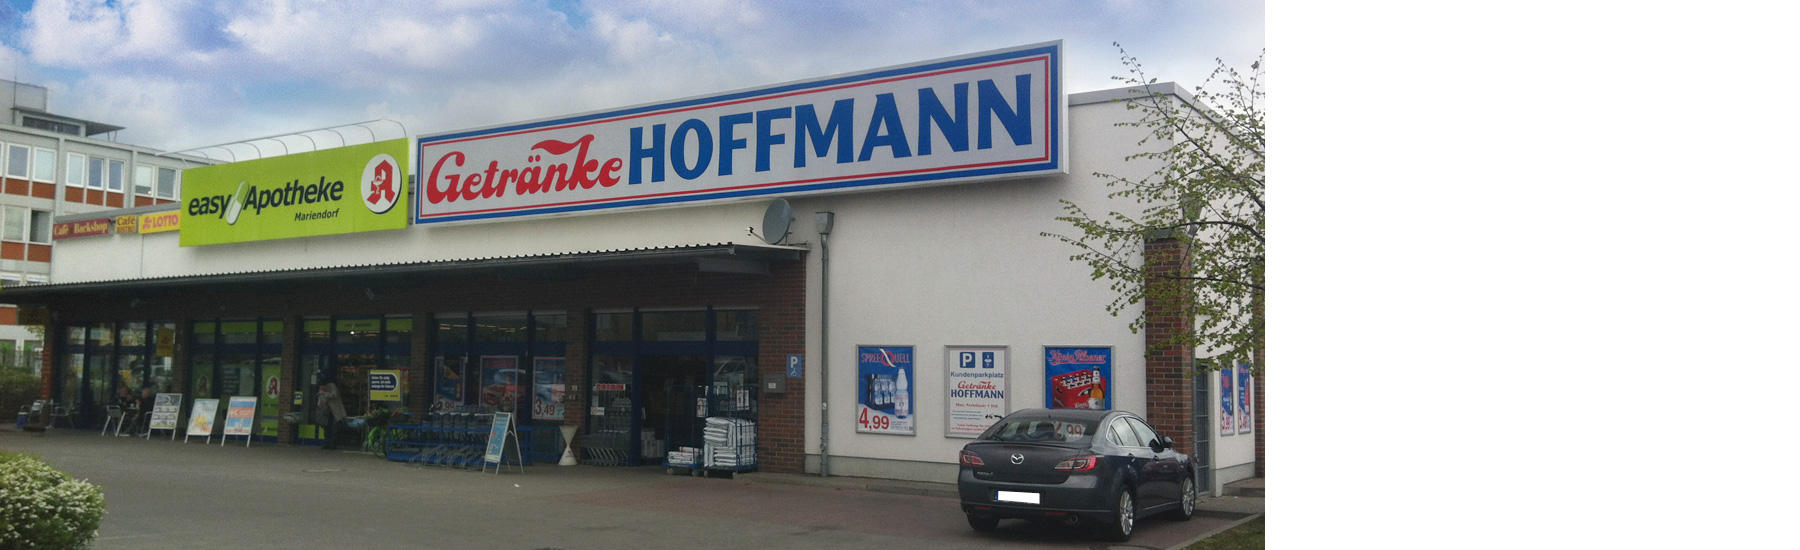 Kundenbild groß 1 Getränke Hoffmann